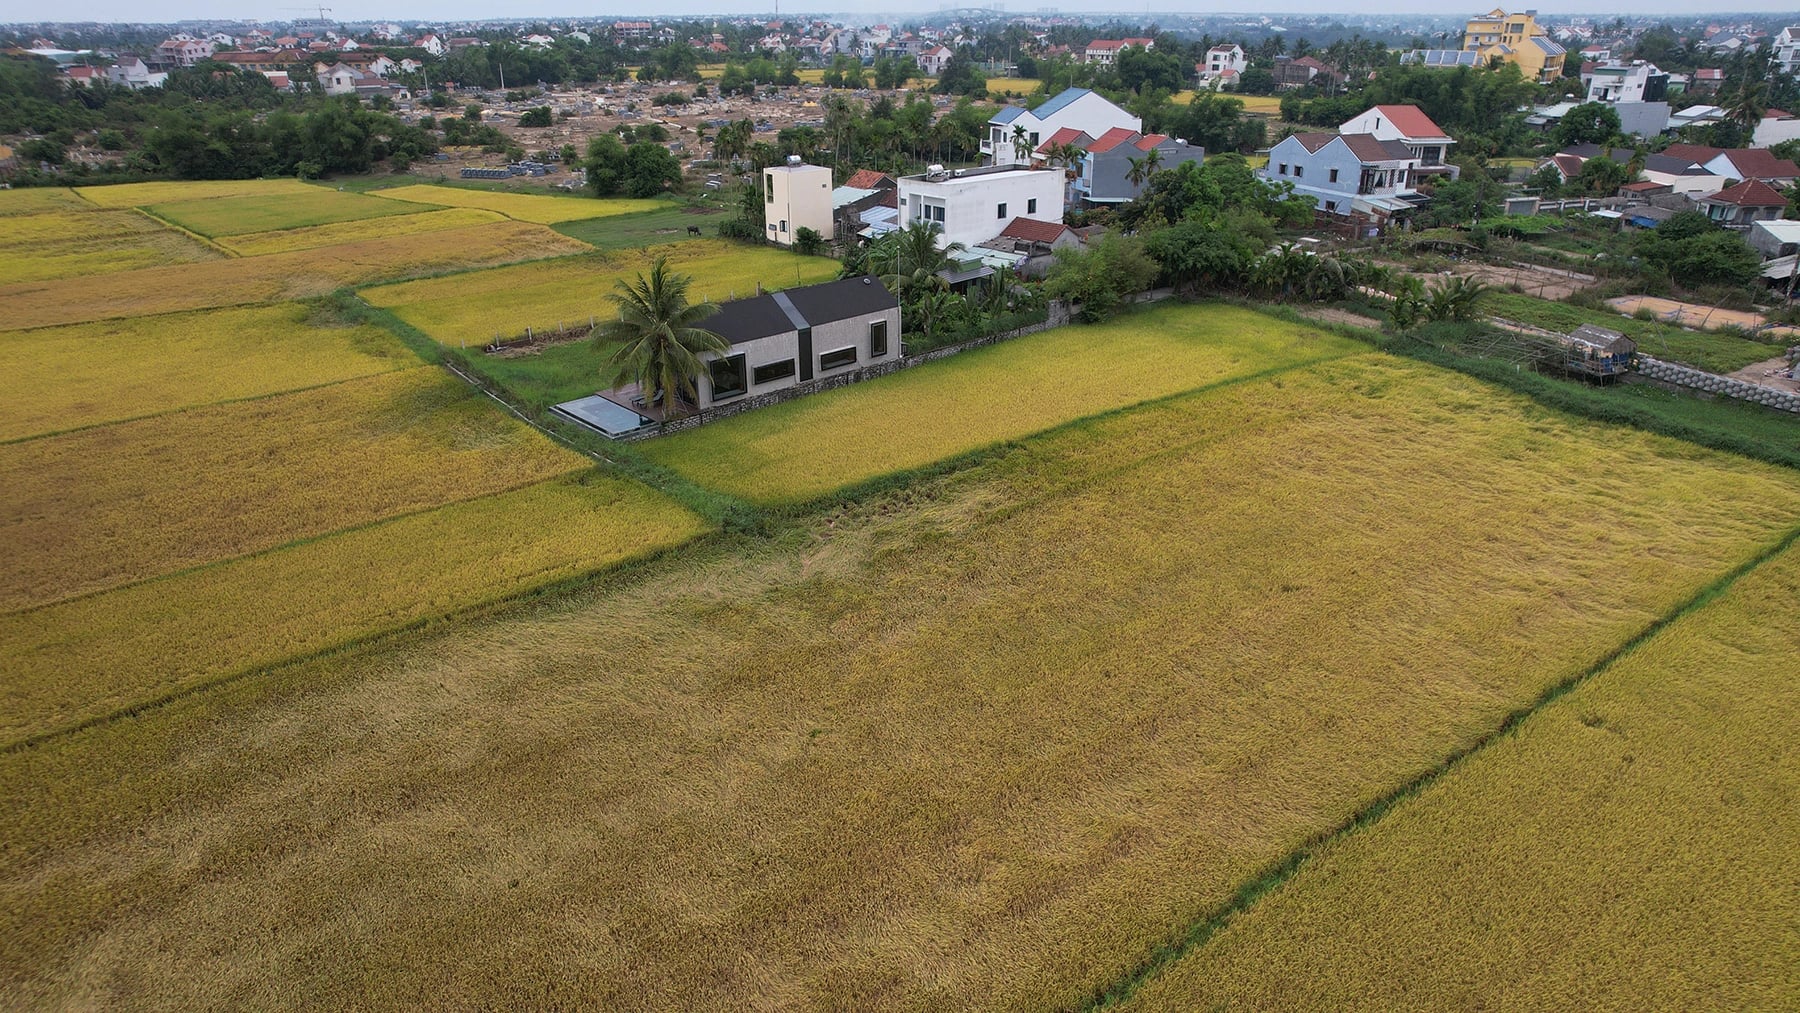 Peaceful countryside in Hoi An City, central Vietnam. Photo: Pham Van Son